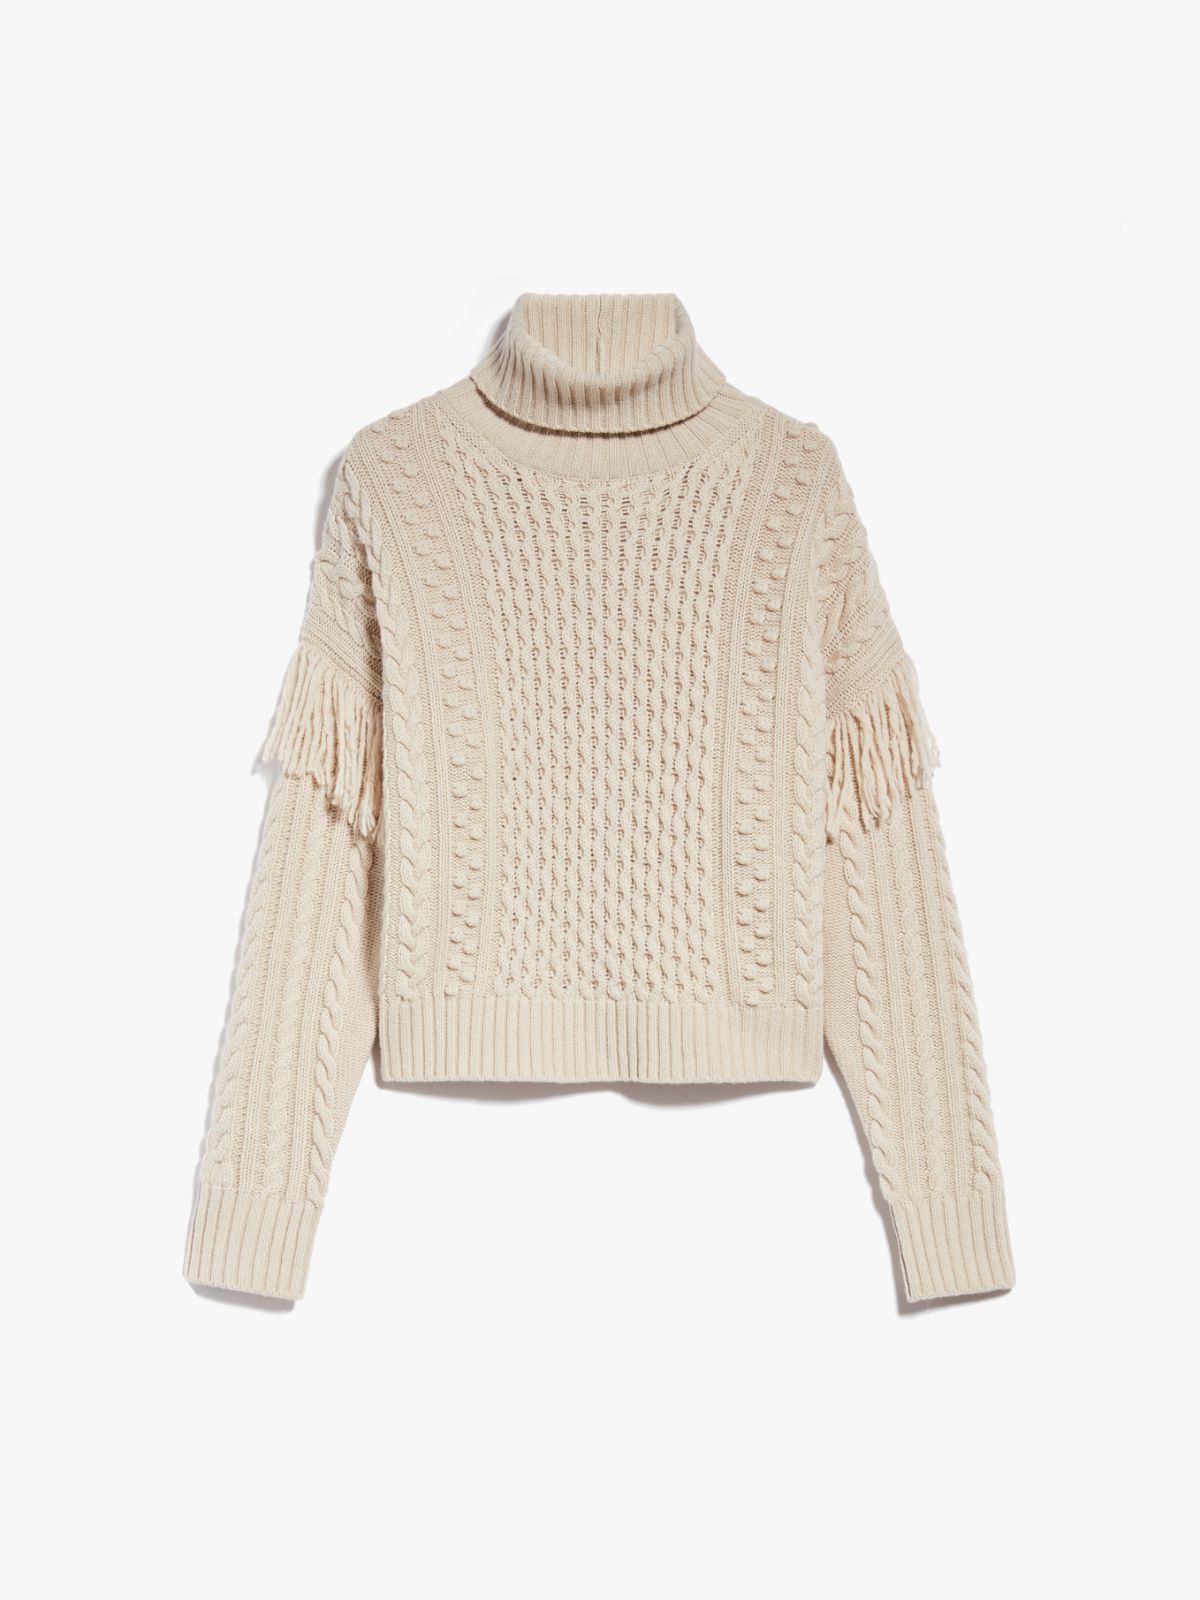 Wool yarn sweater - BEIGE - Weekend Max Mara - 6